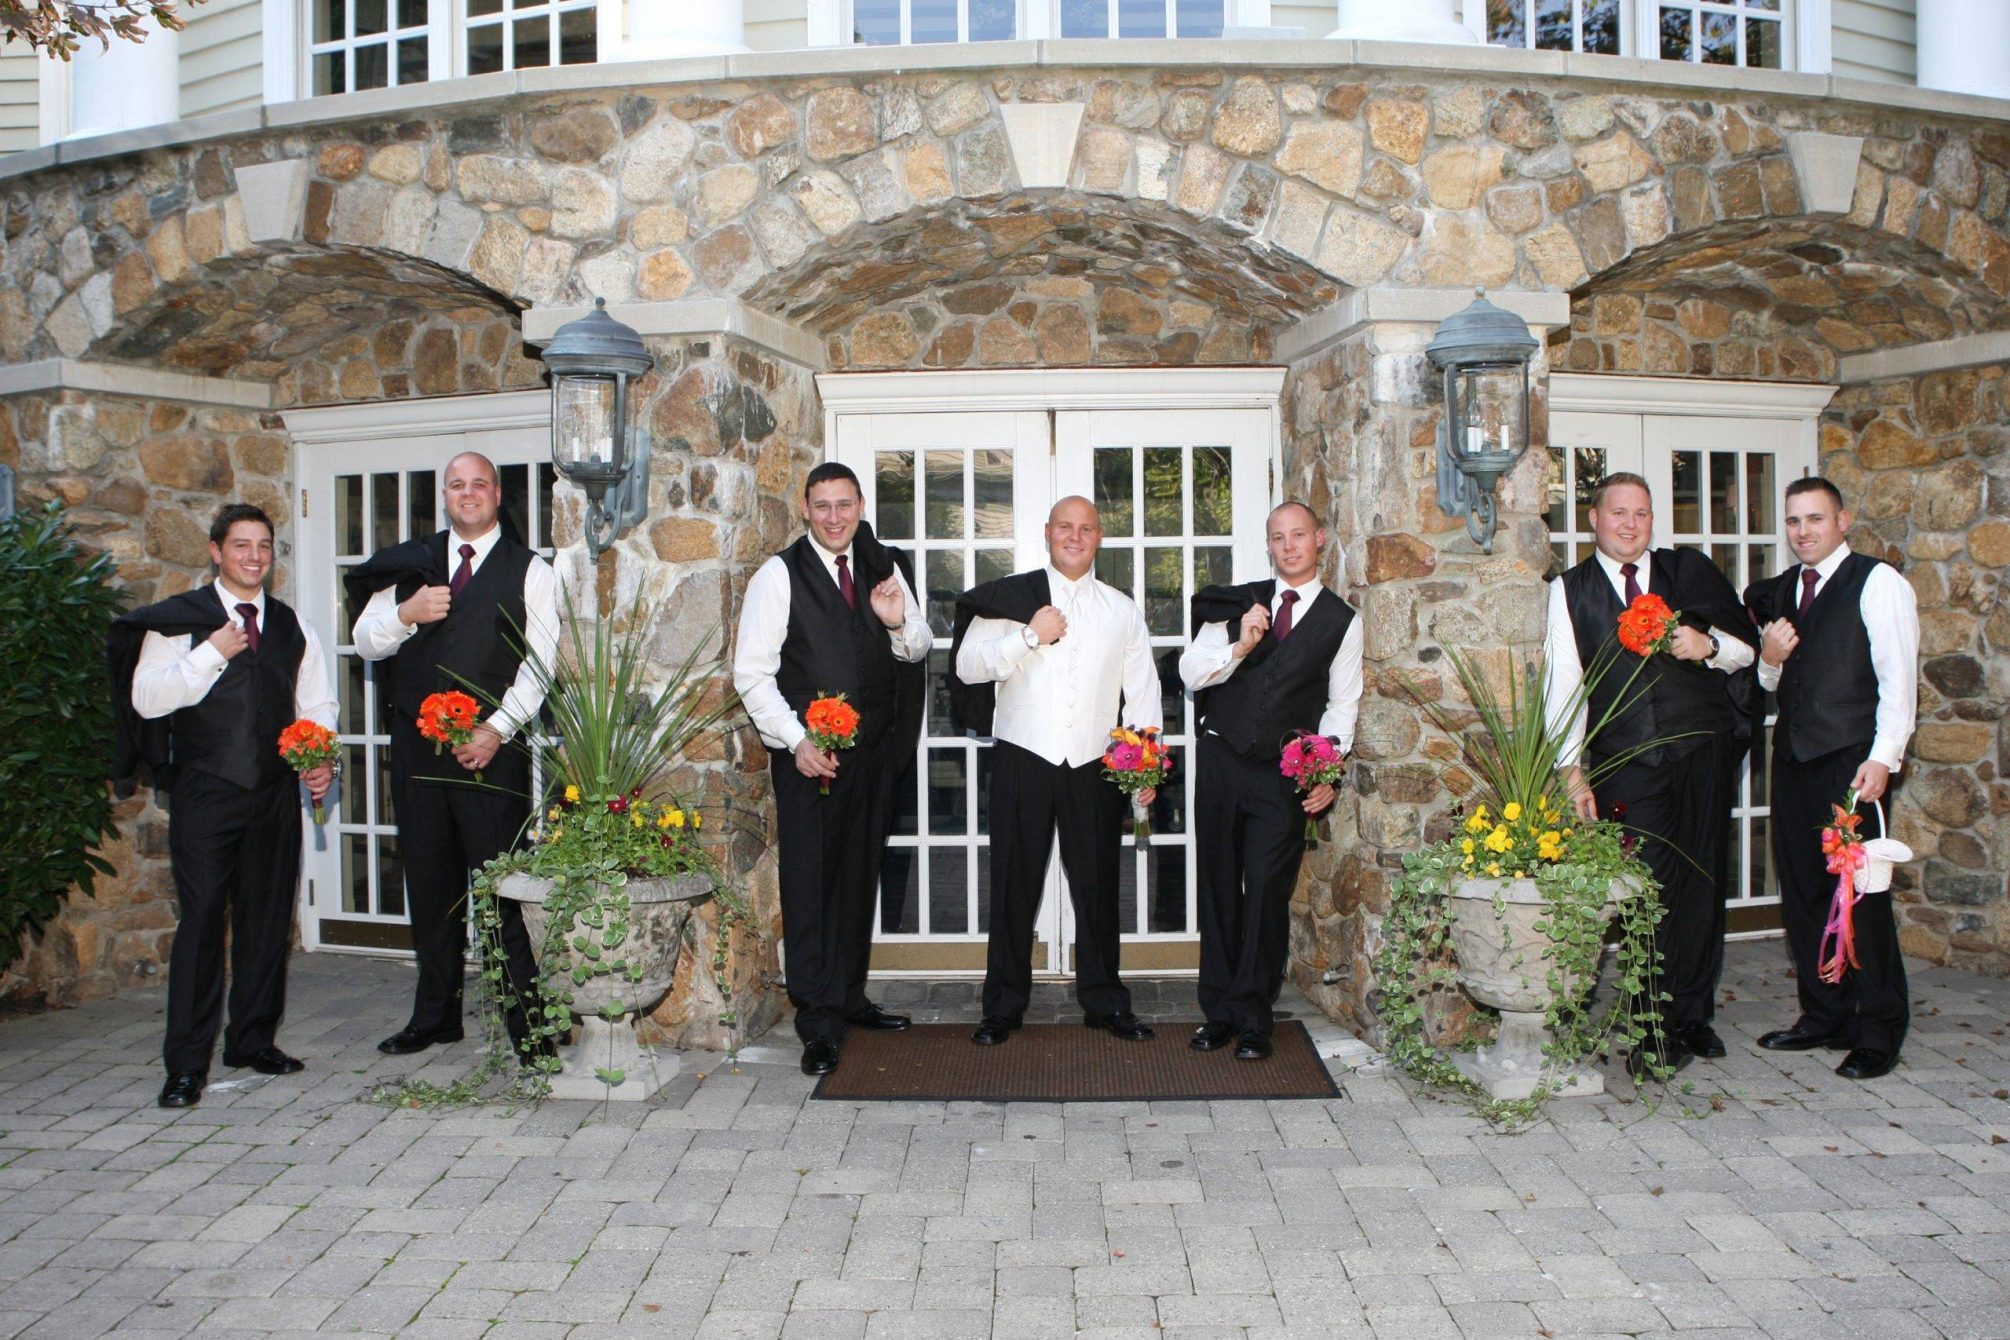 Olde Mill Inn groom with his groomsmen outside